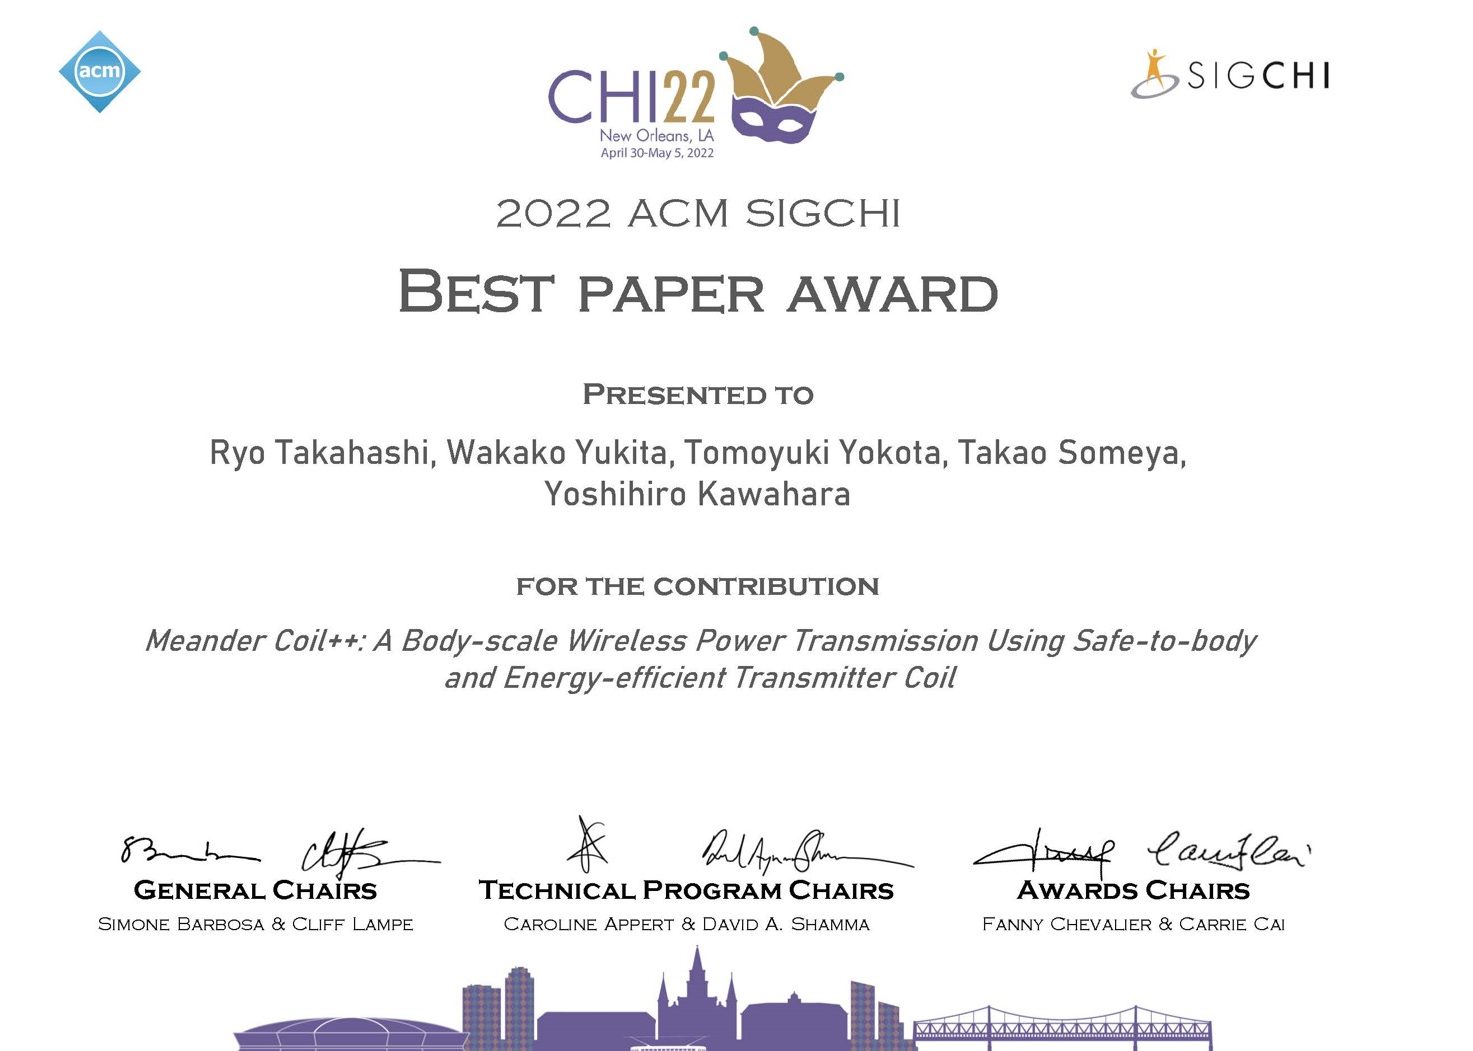 CHI Best Paper Award